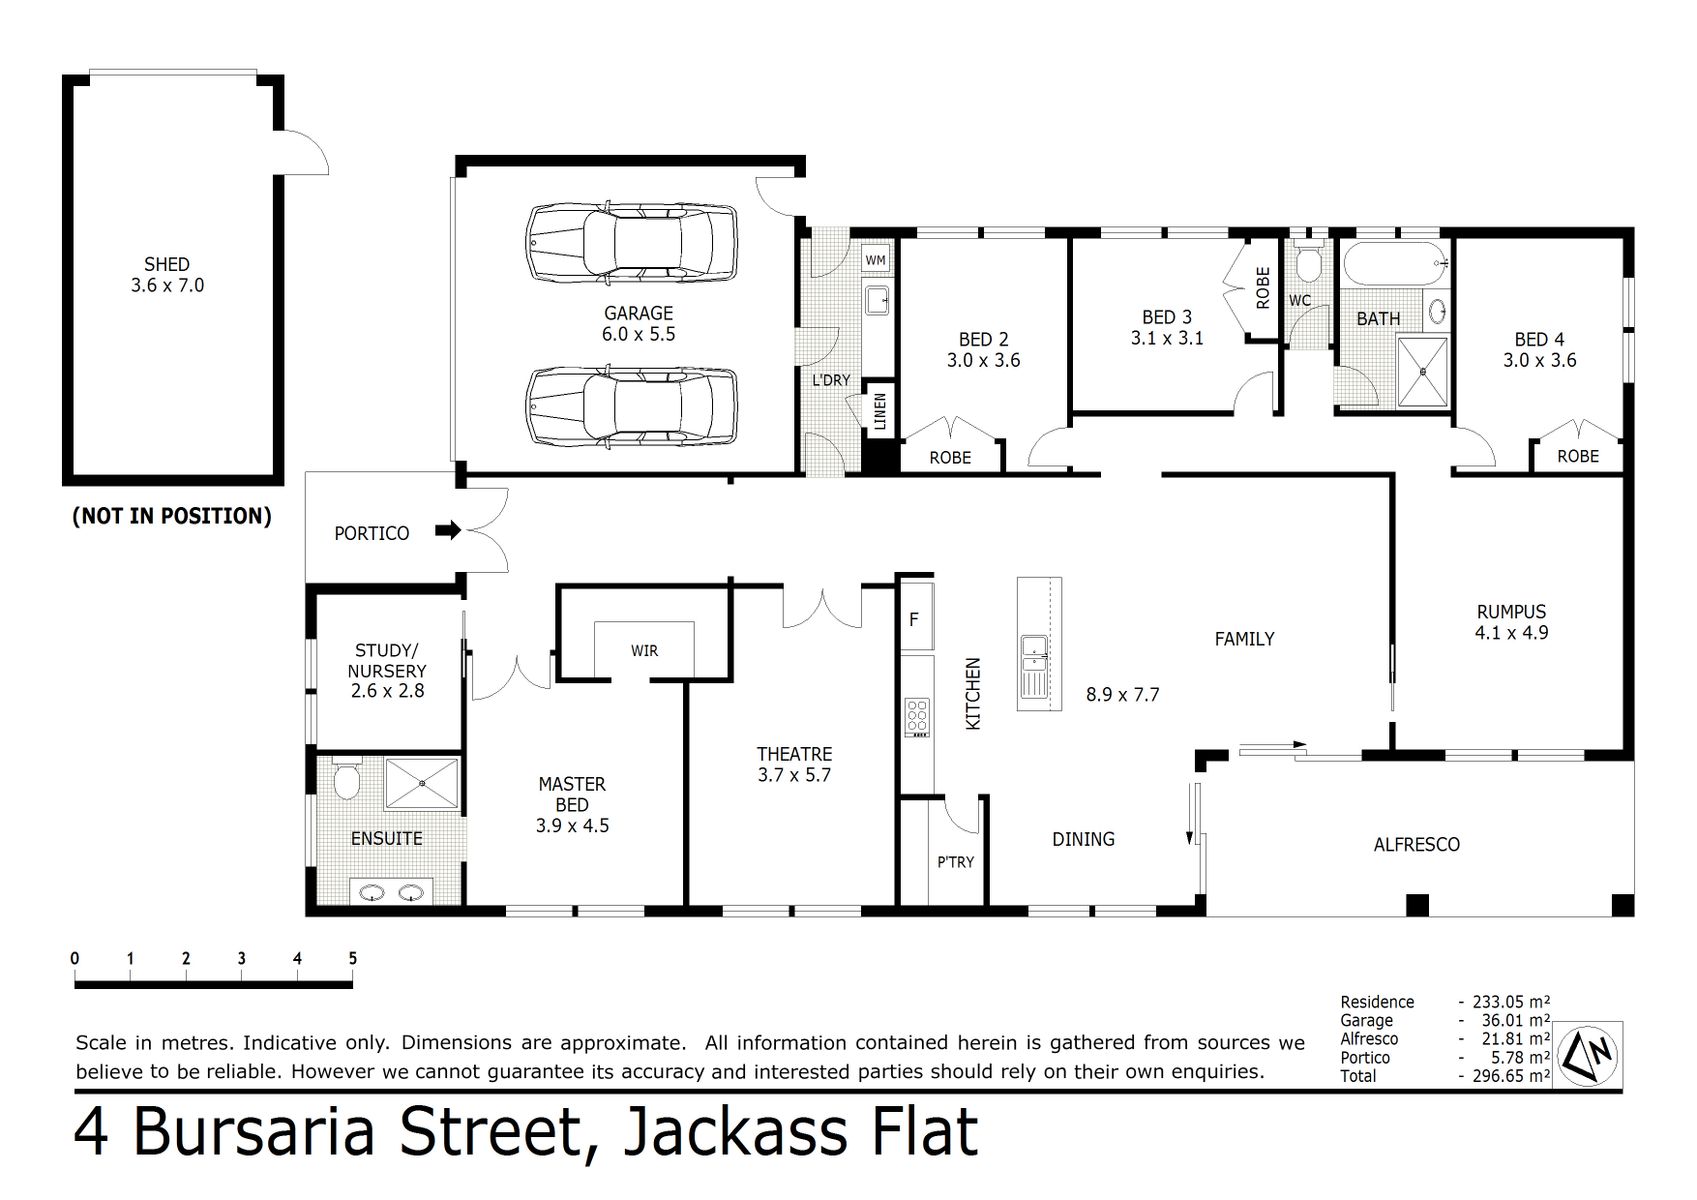 4 Bursaria Street Jackass Flat (16 AUG 2021) 249sqm (6)